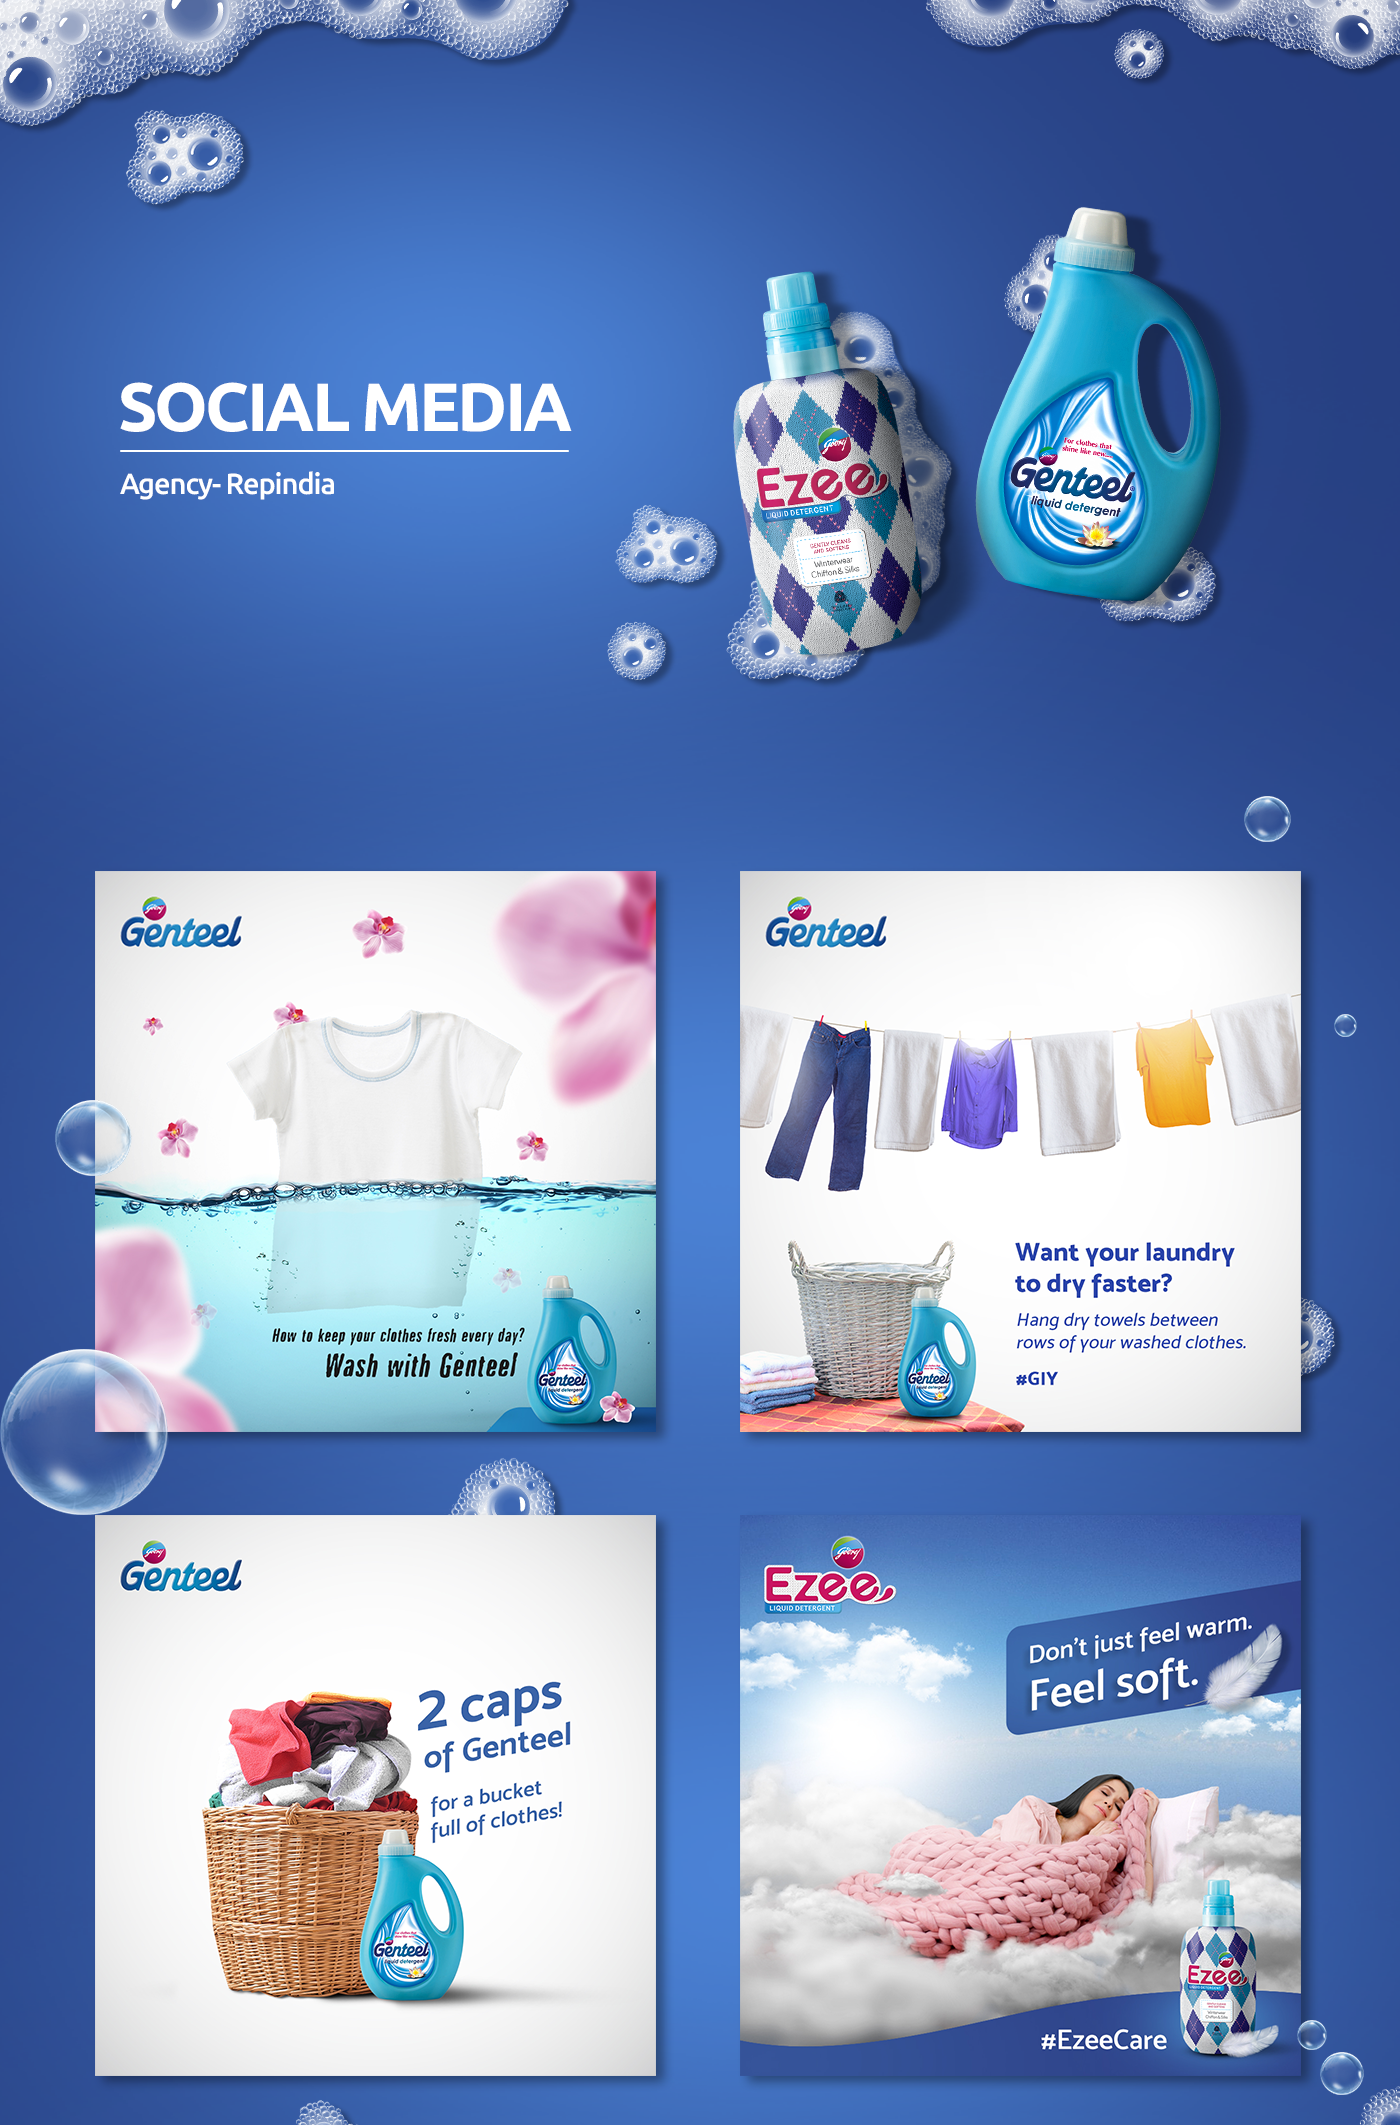 goodrej ezee genteel detergent social media fabric cleaner fresh soft